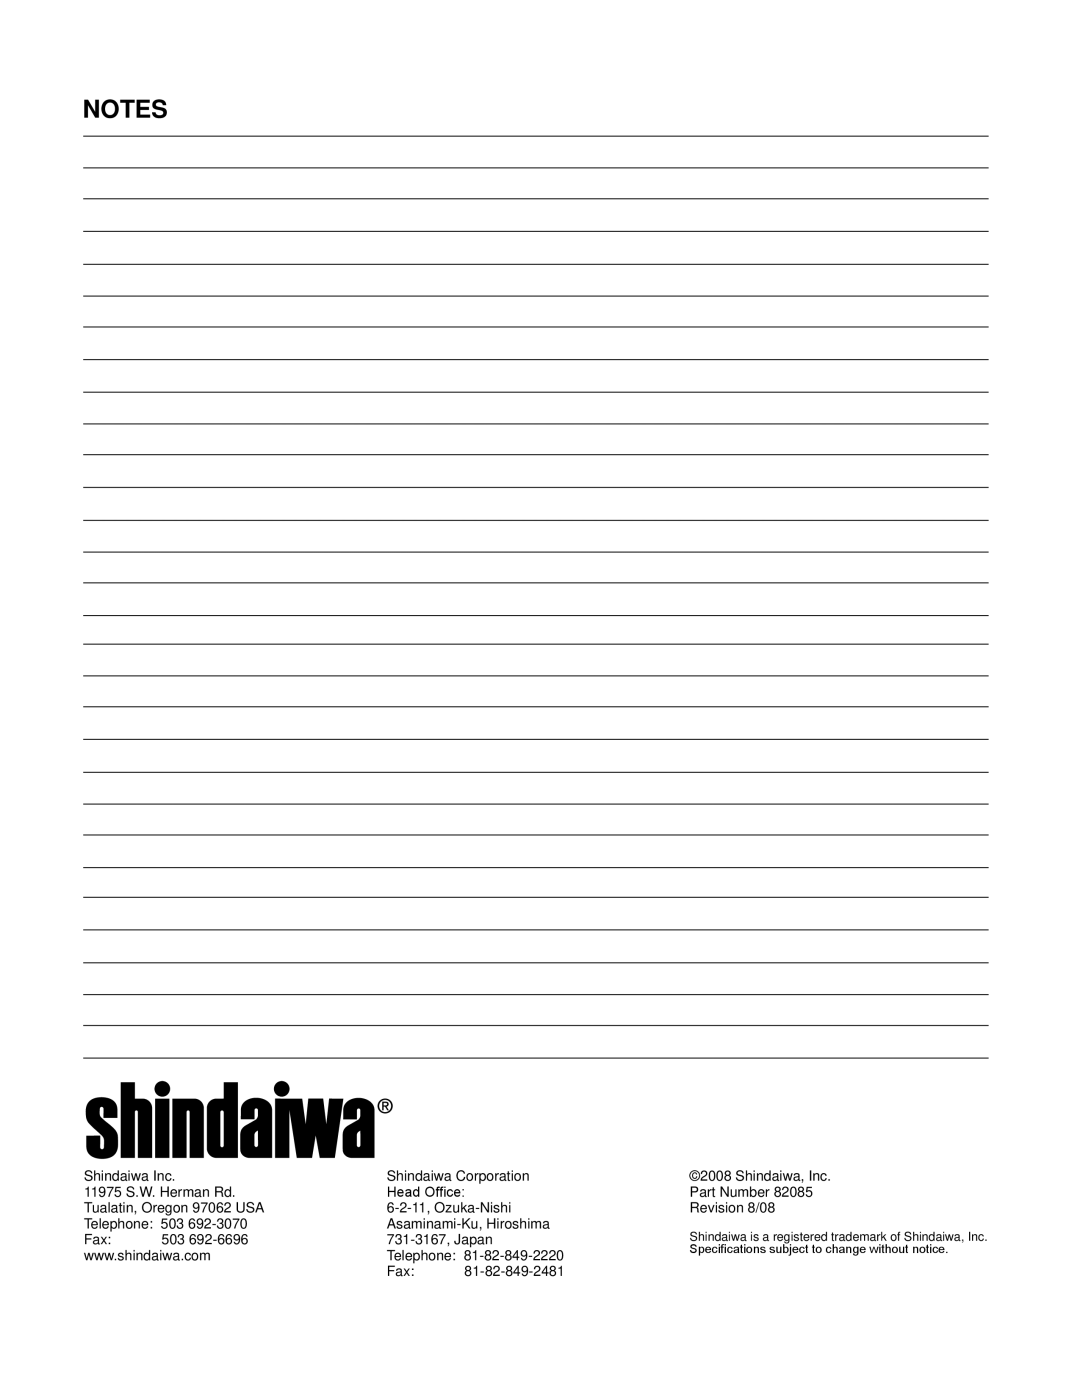 Shindaiwa 82085, 326T manual 